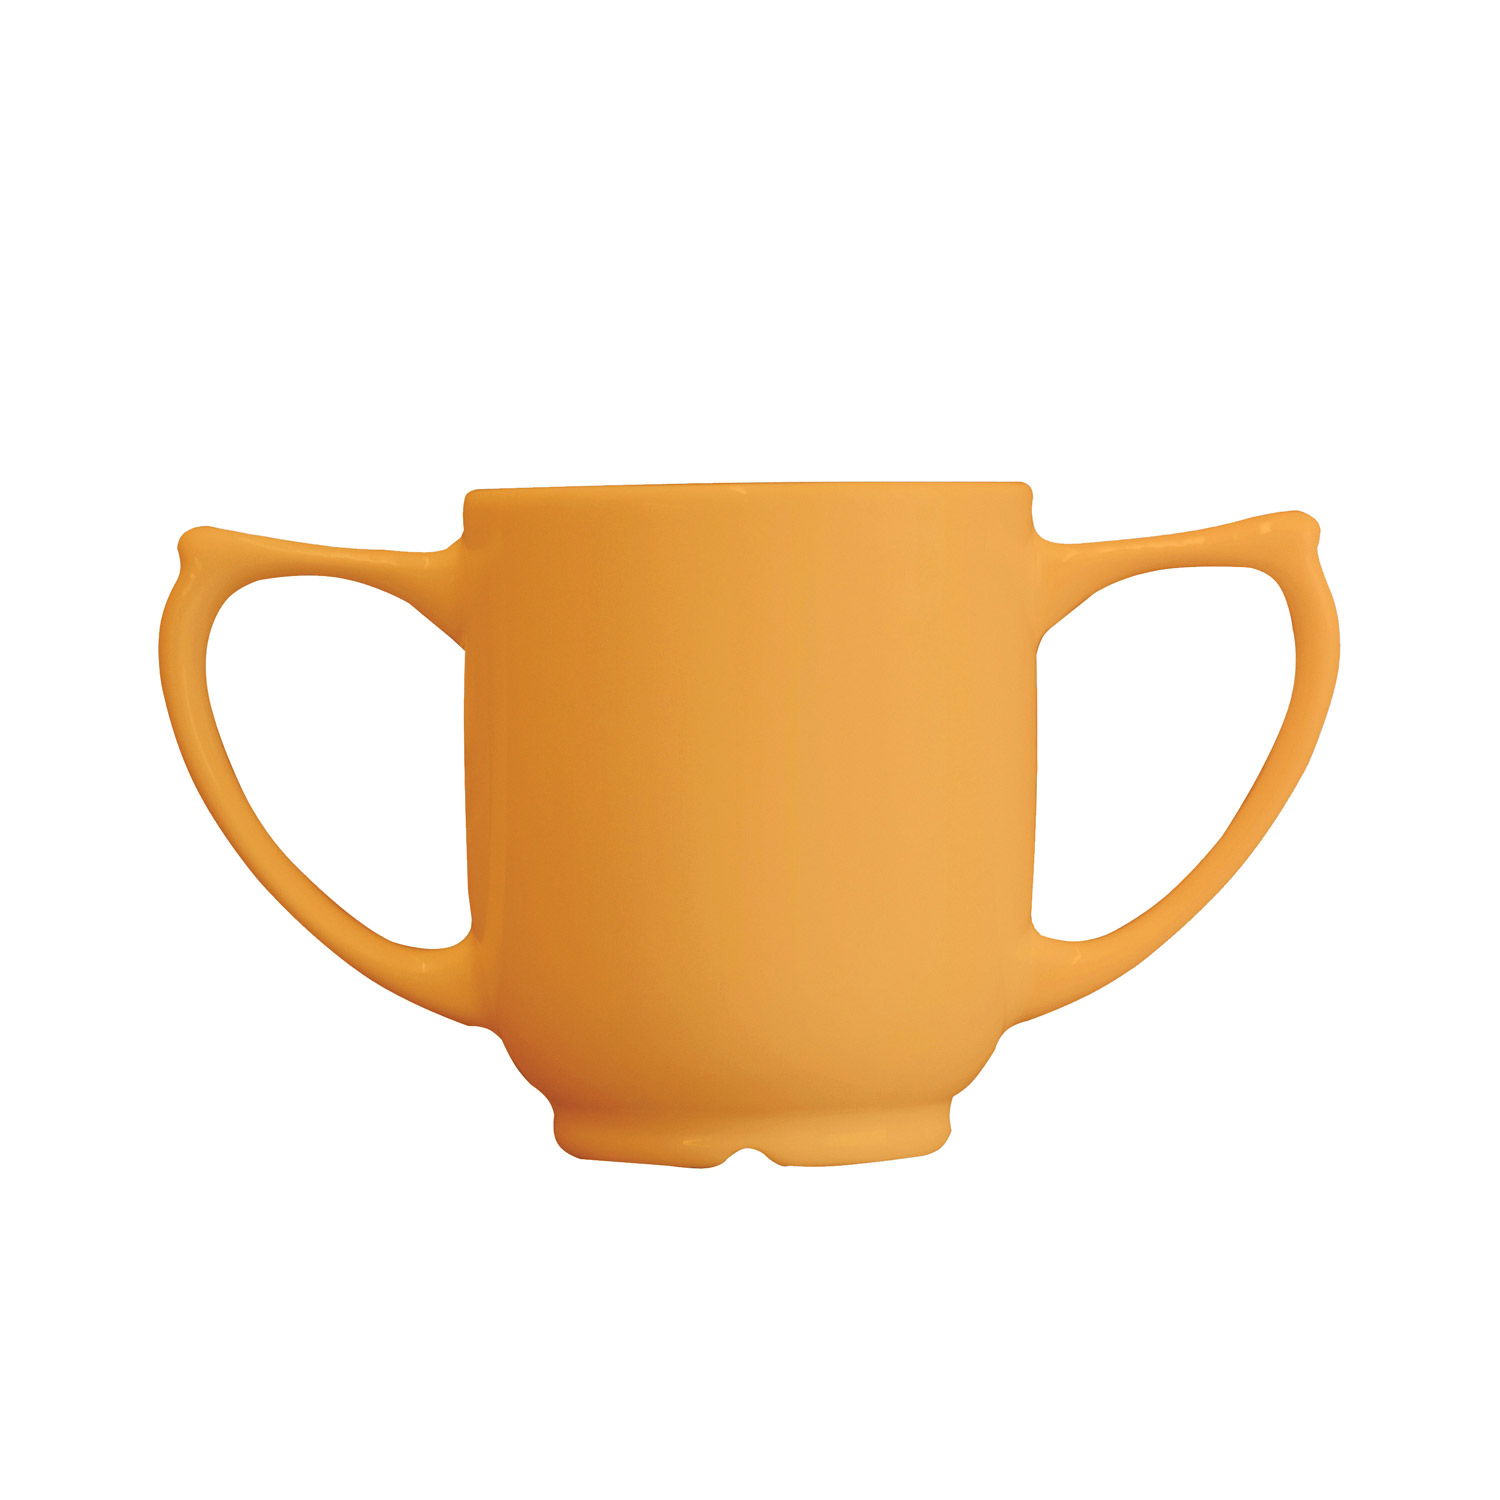 Dignity - Two Handled Ceramic Mug - 250ml - Yellow